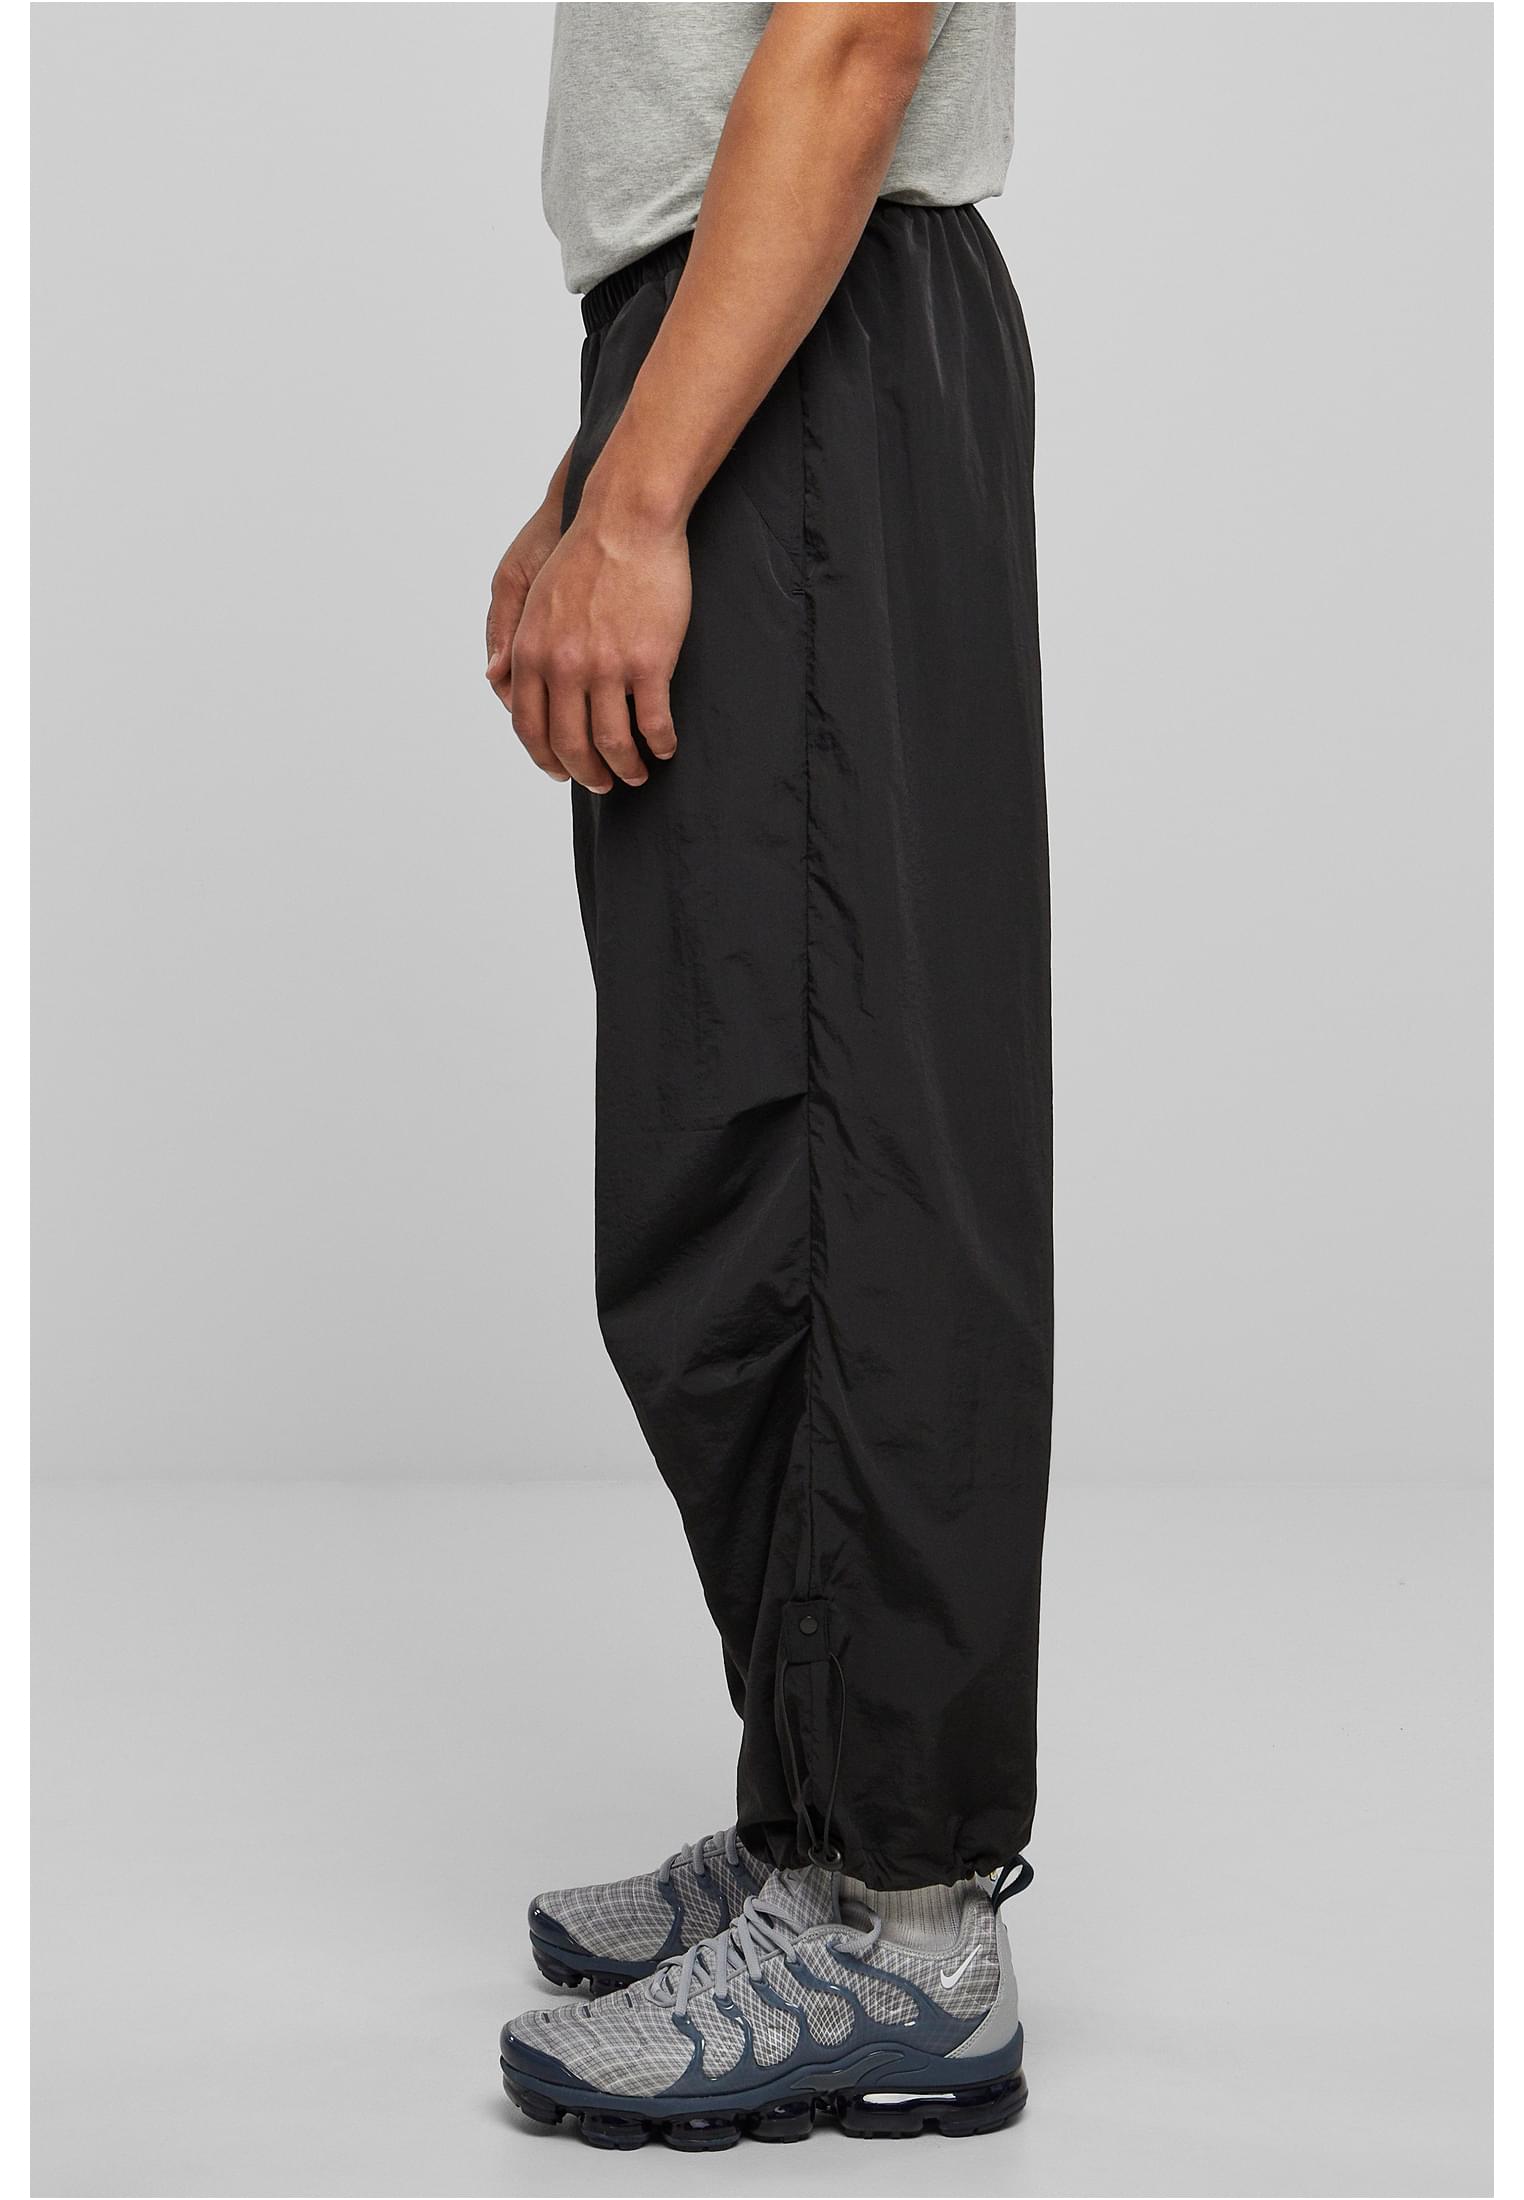 Nylon parachute trousers, Urban Classics Cloth Trousers